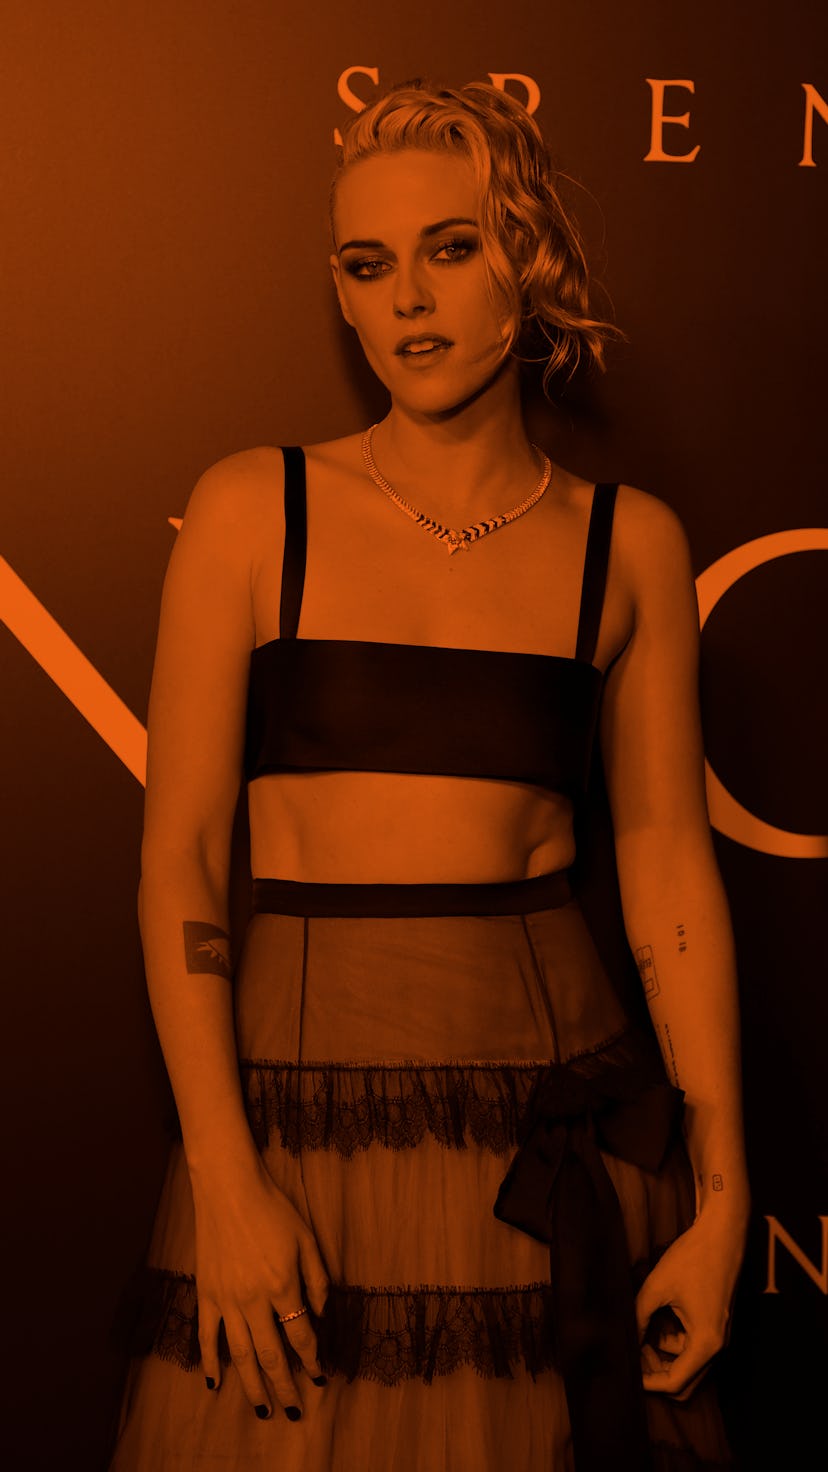 LOS ANGELES, CALIFORNIA - OCTOBER 26: Kristen Stewart attends the Los Angeles premiere of Neon's "Sp...